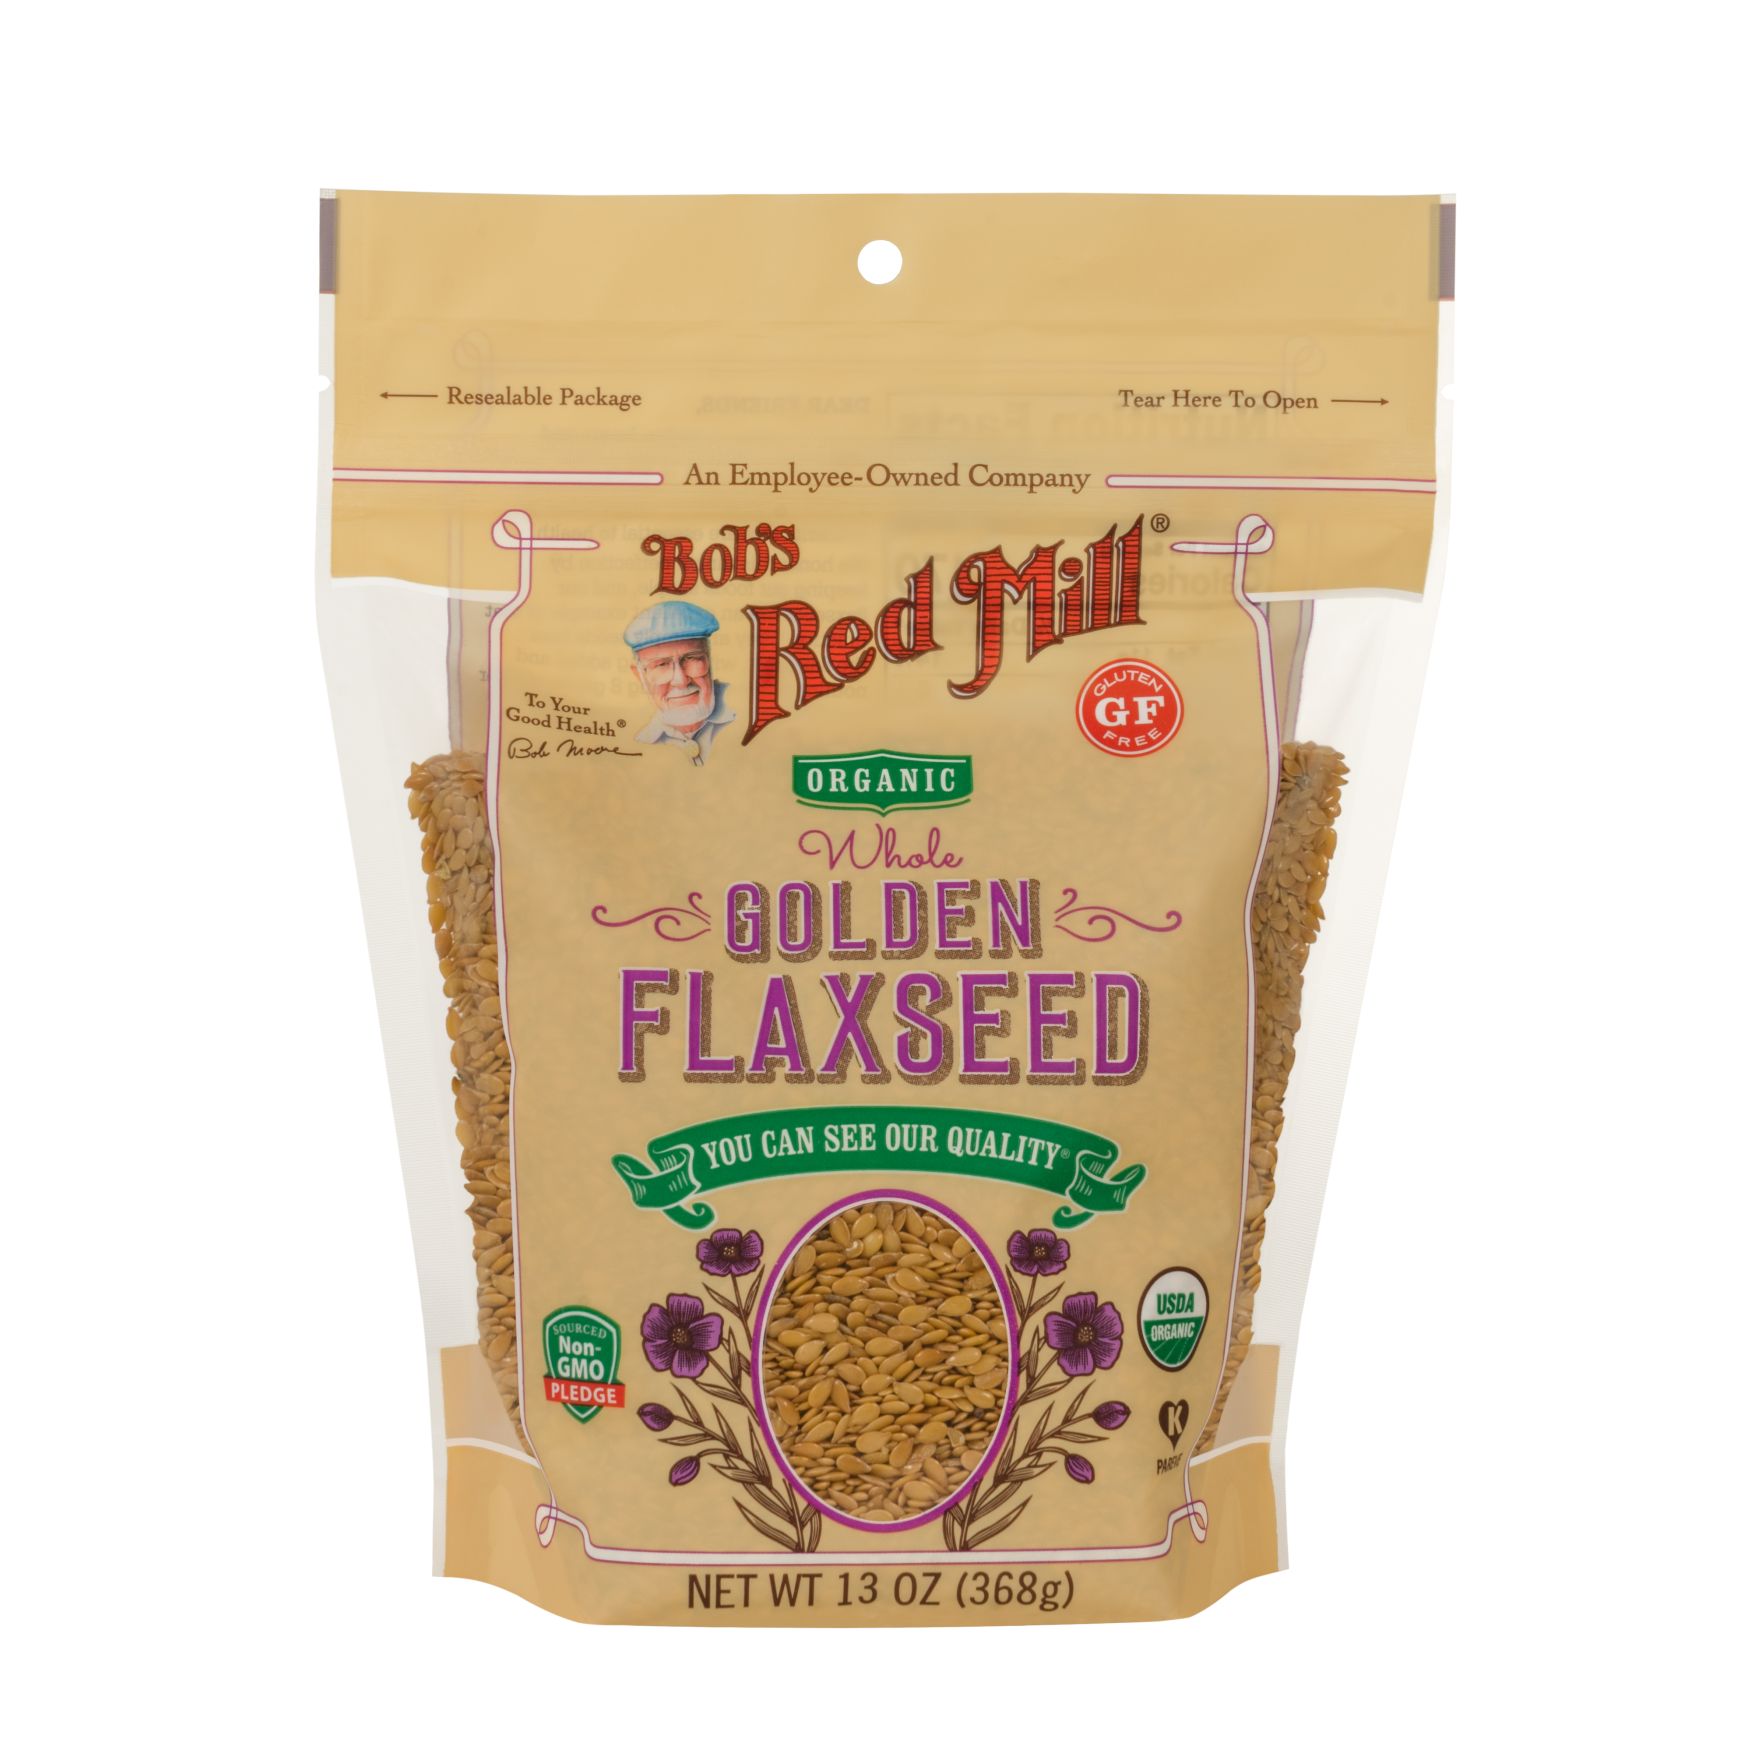 Is Flaxseed Gluten-Free?